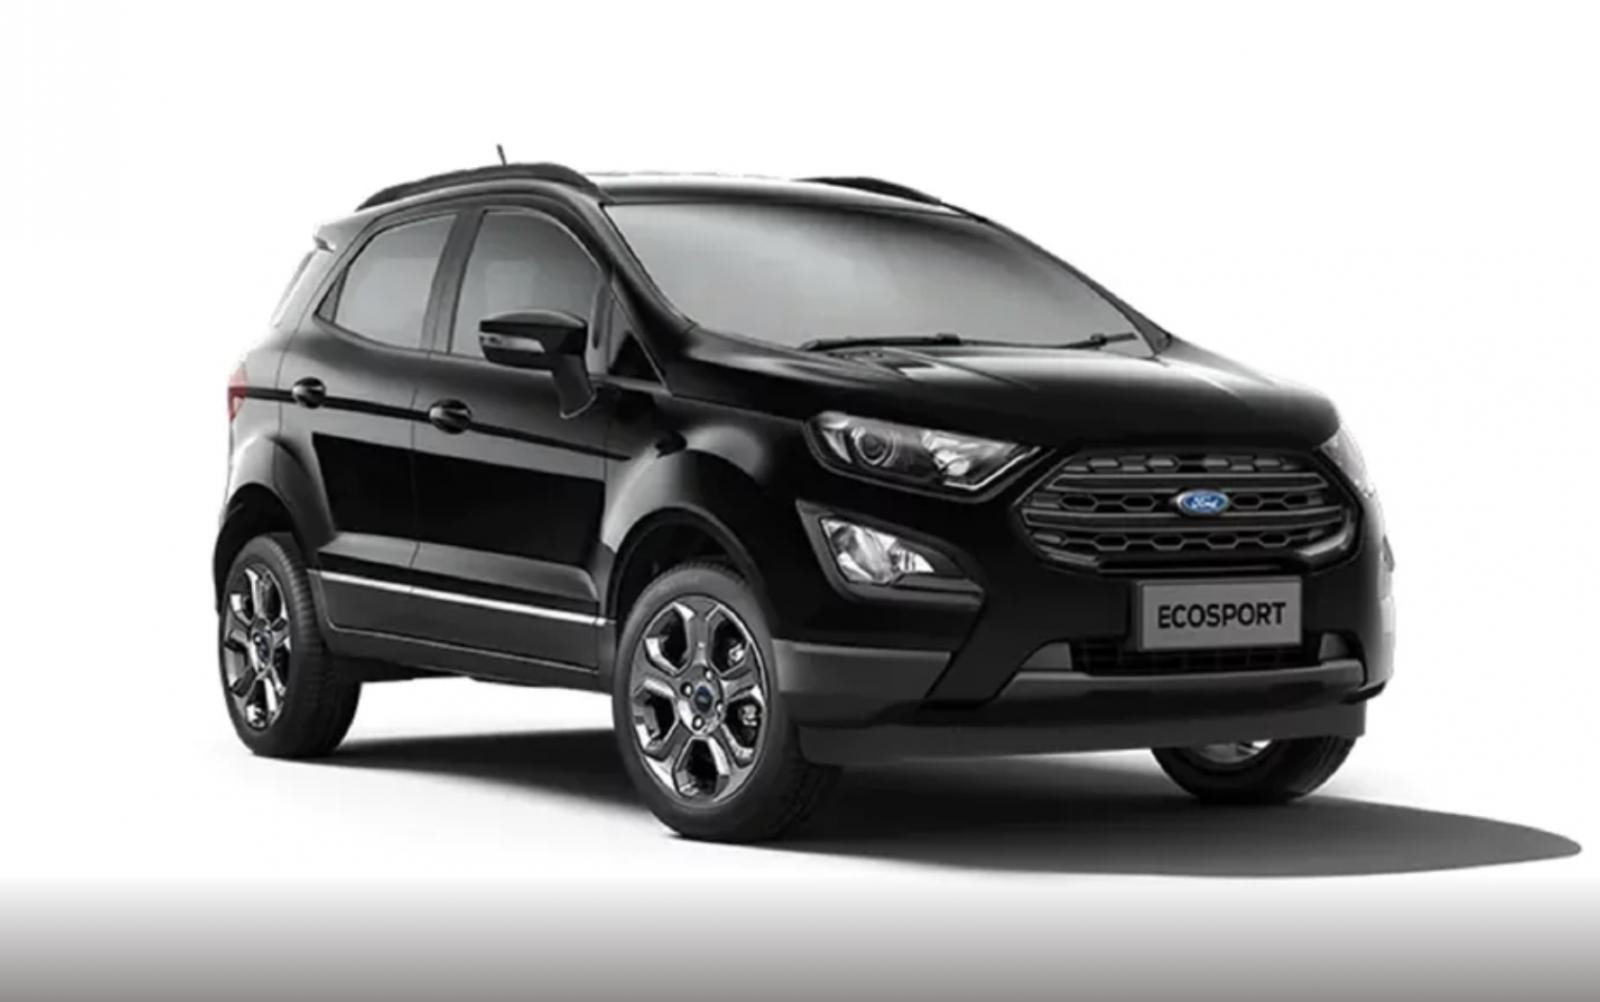 2018 Ford Ecosport black